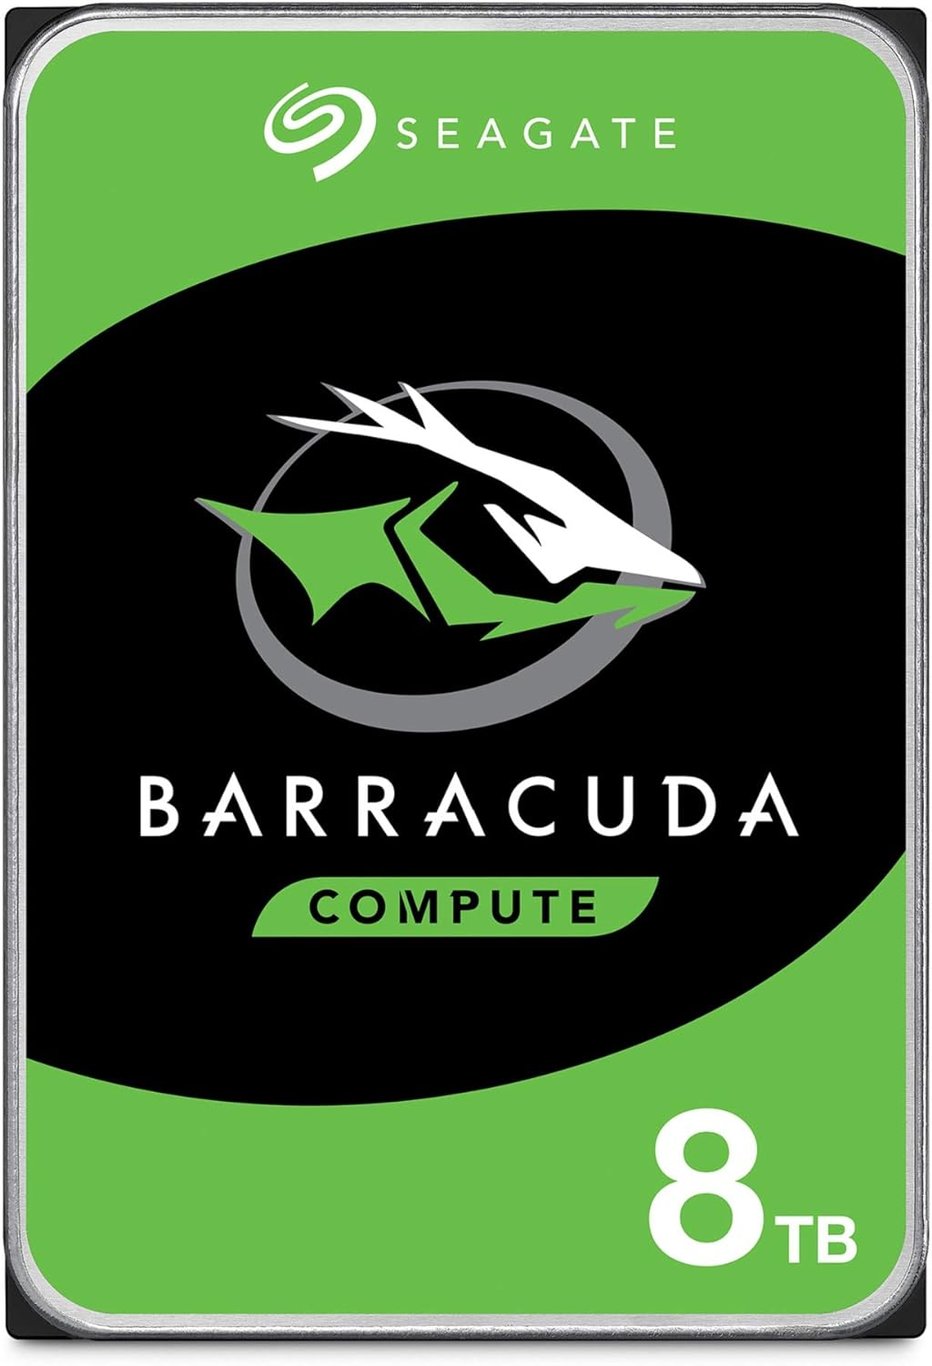 Seagate Barracuda 8TB 5400rpm 256MB 3.5" Desktop HDD (ST8000DM004)